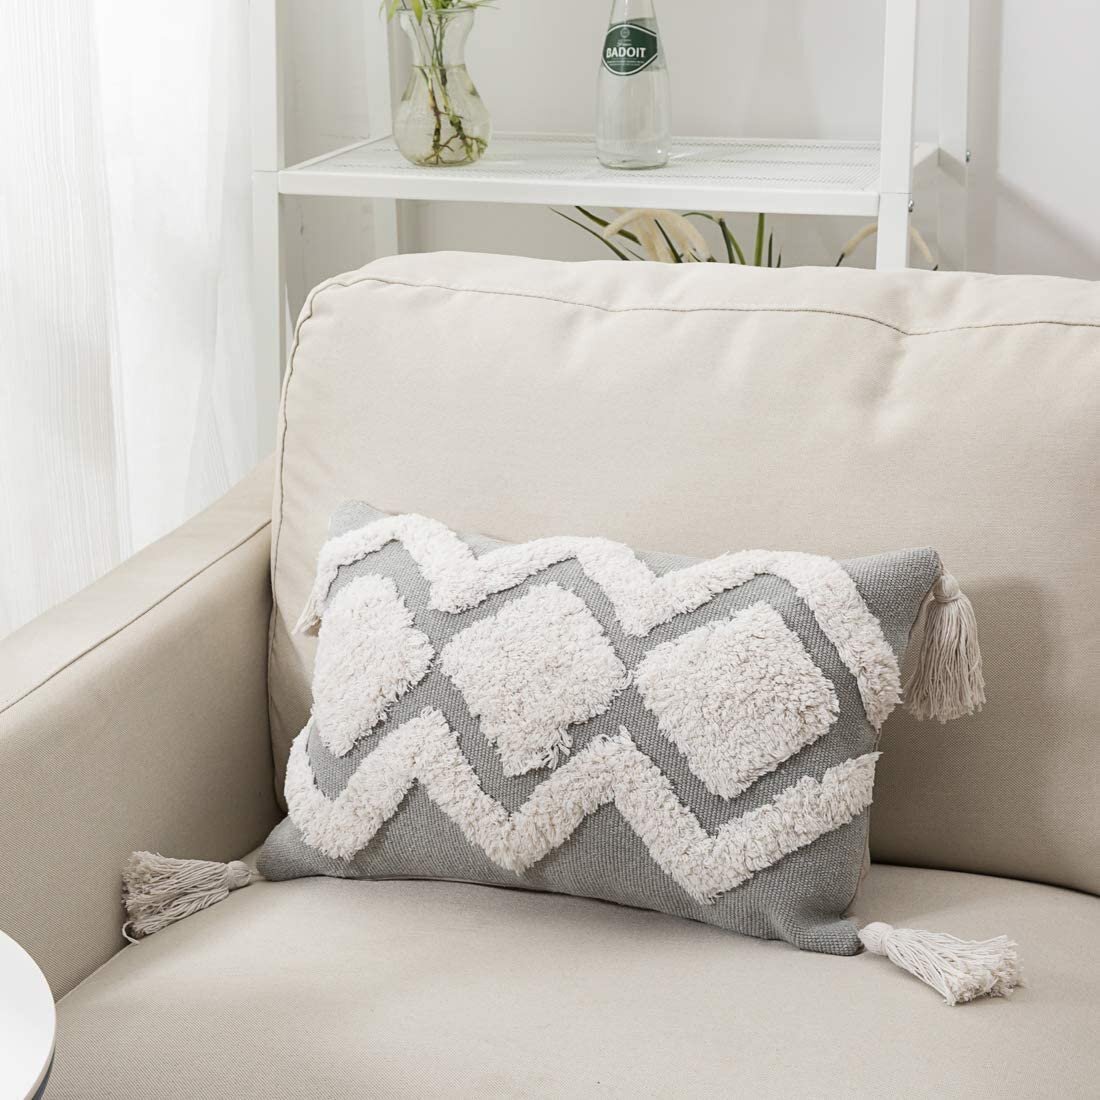 Boho Floral Theme Pillowcase Cover Home Sofa Cushion Cover Set of 2 Pillow Cases 